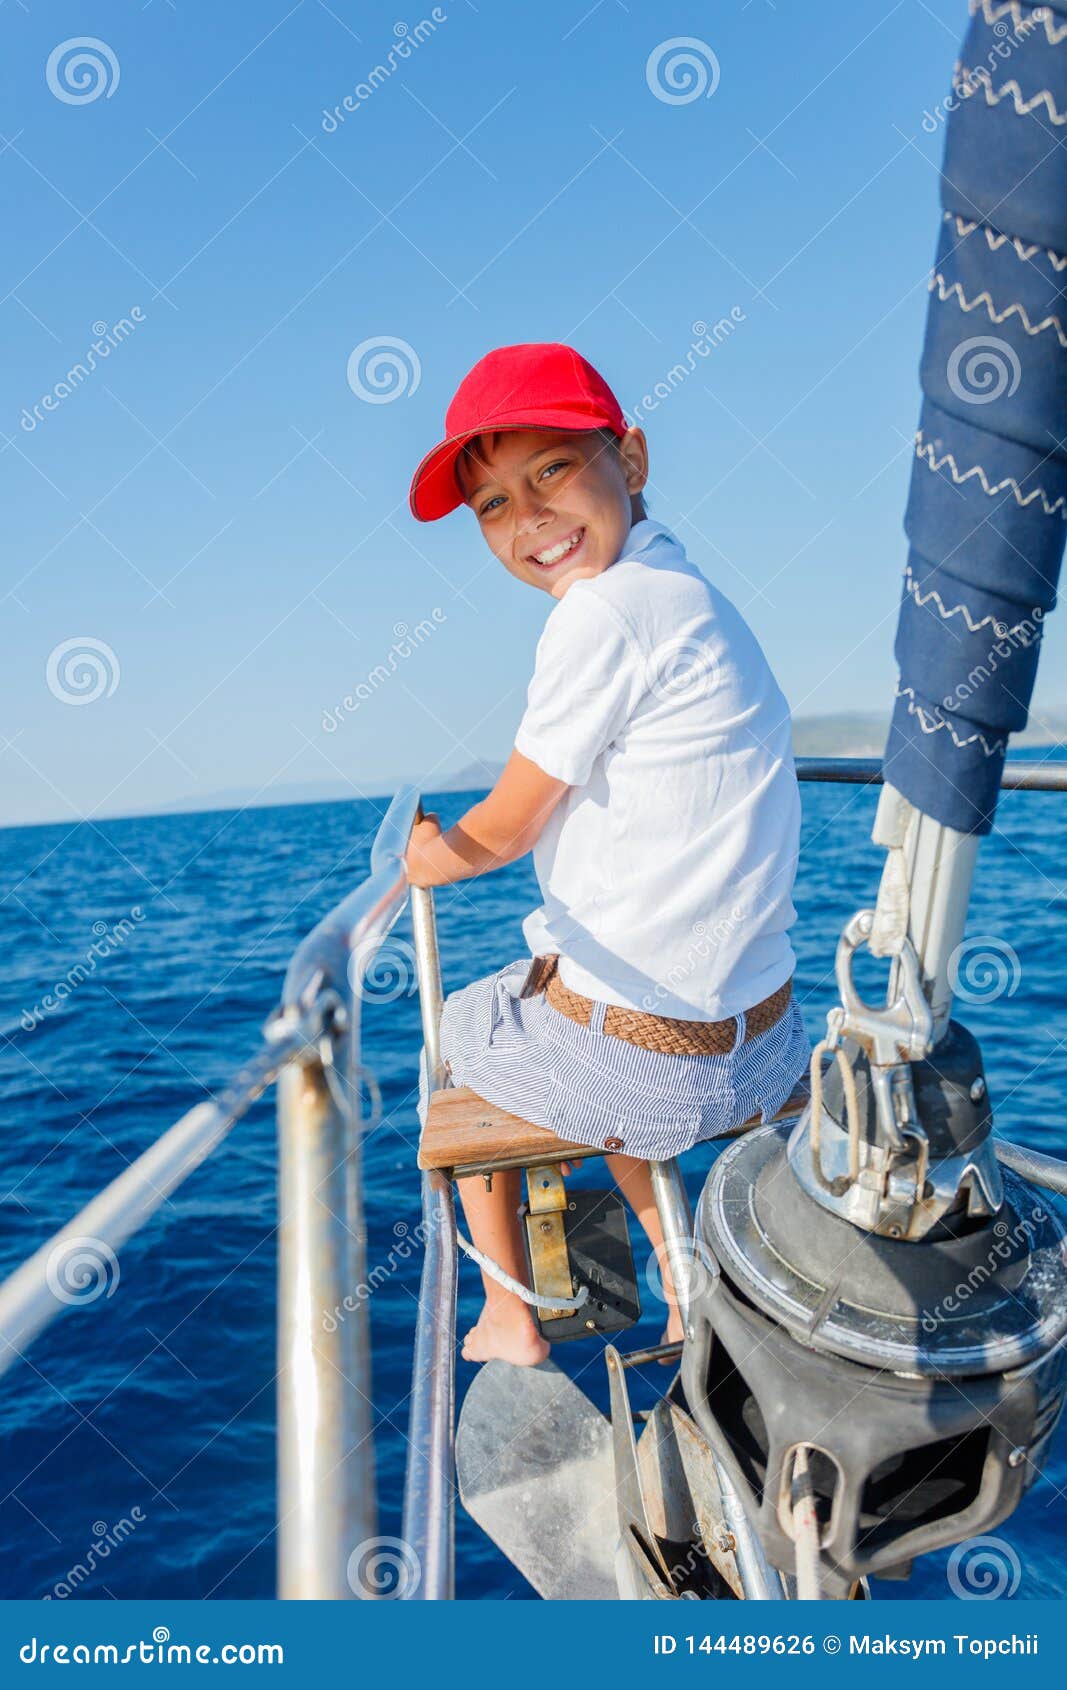 yacht kid